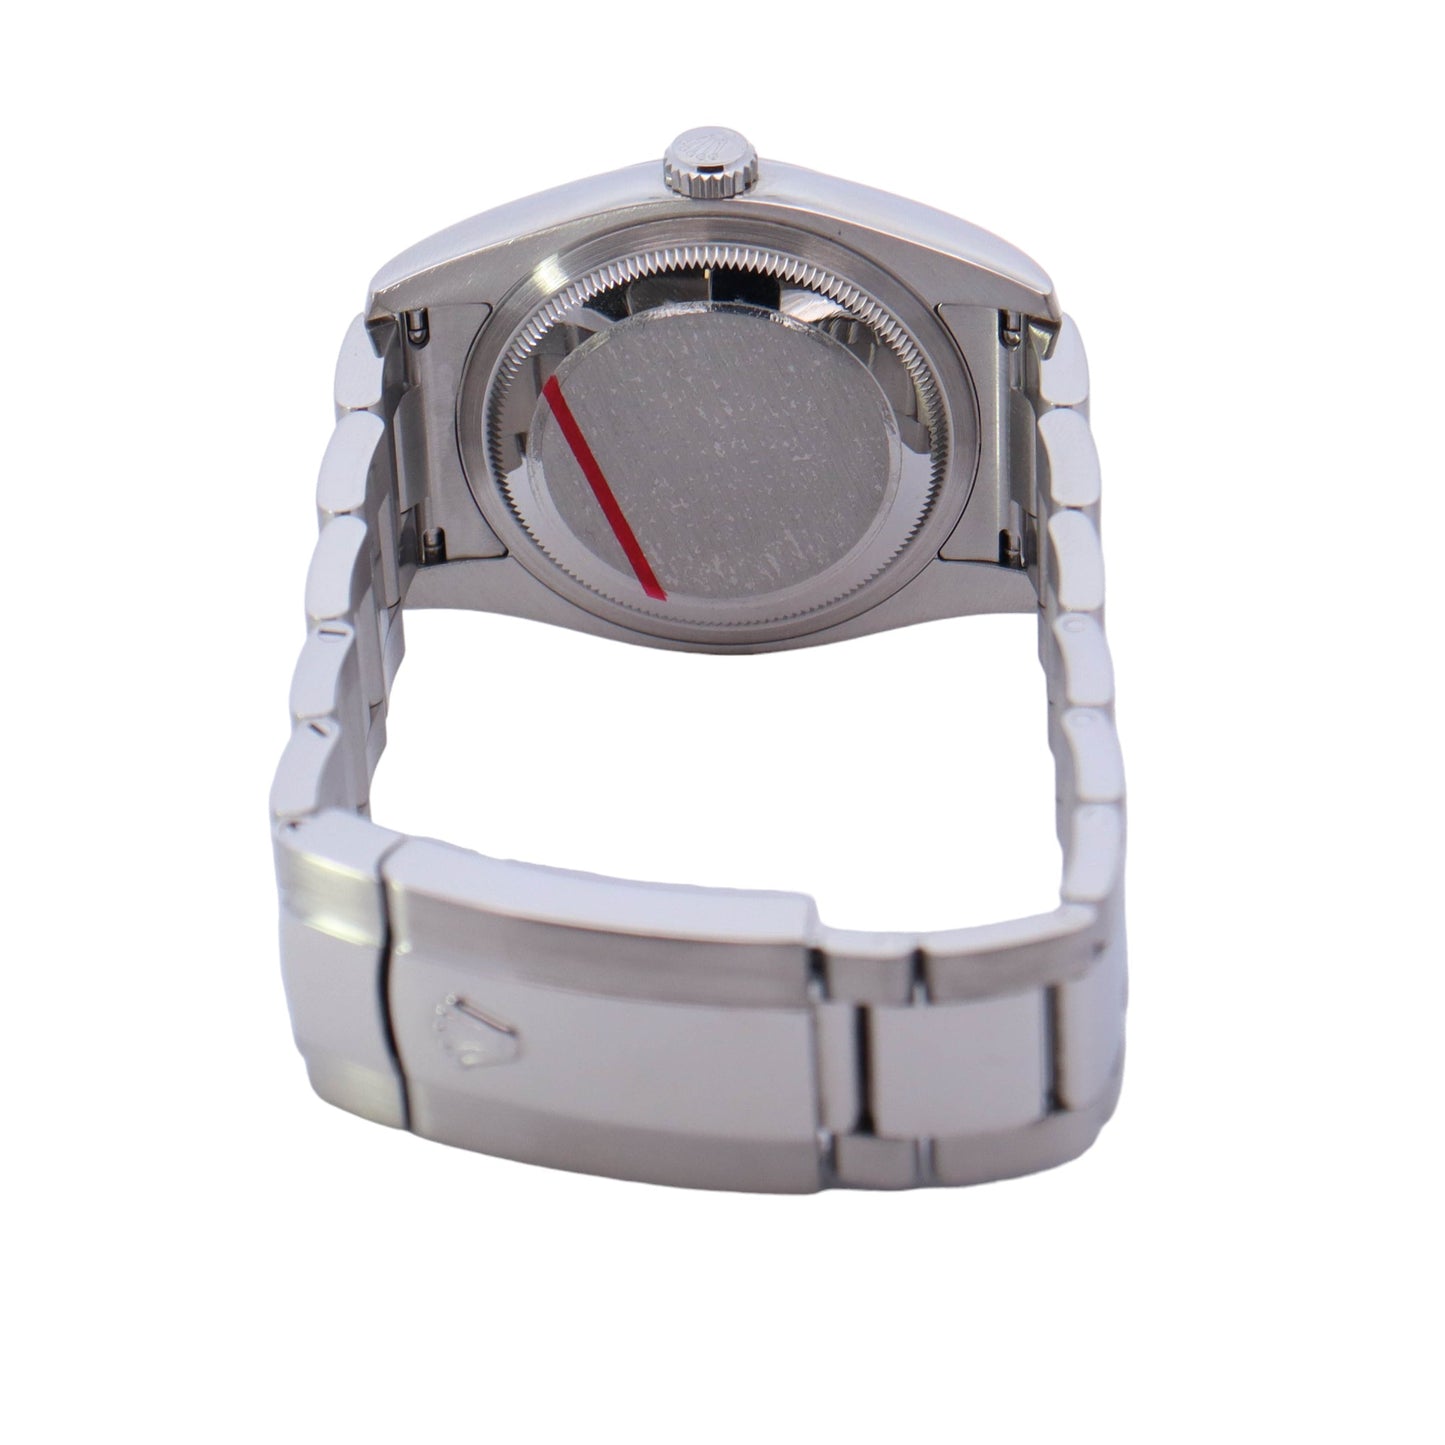 Rolex Datejust Stainless Steel 36mm White Stick Dial Watch Reference #: 116200 - Happy Jewelers Fine Jewelry Lifetime Warranty